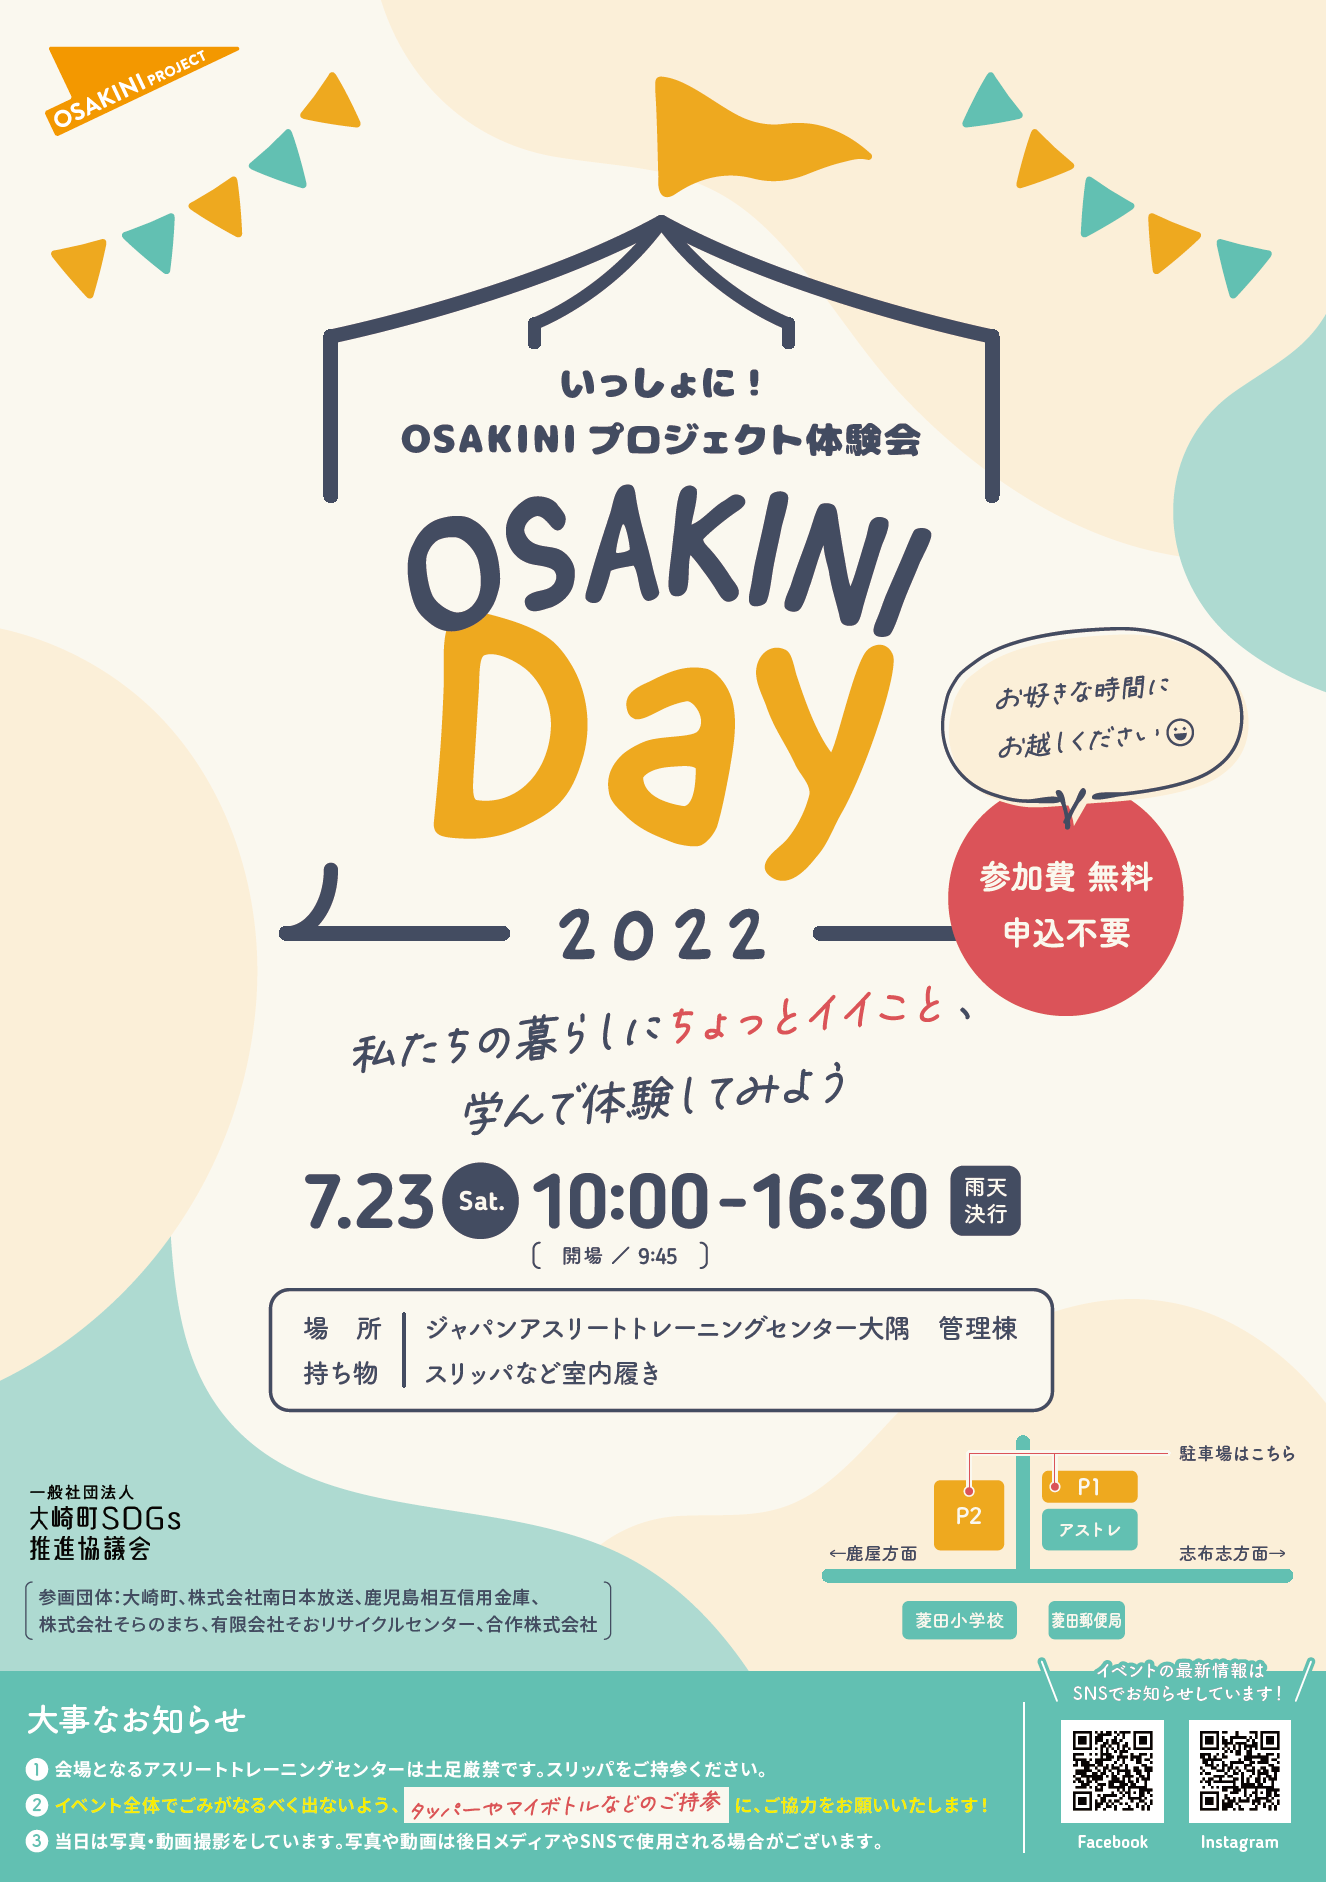 「OSAKINI Day 2022」7月23日(土)@大崎町ジャパンアスリートトレーニングセンター大隅